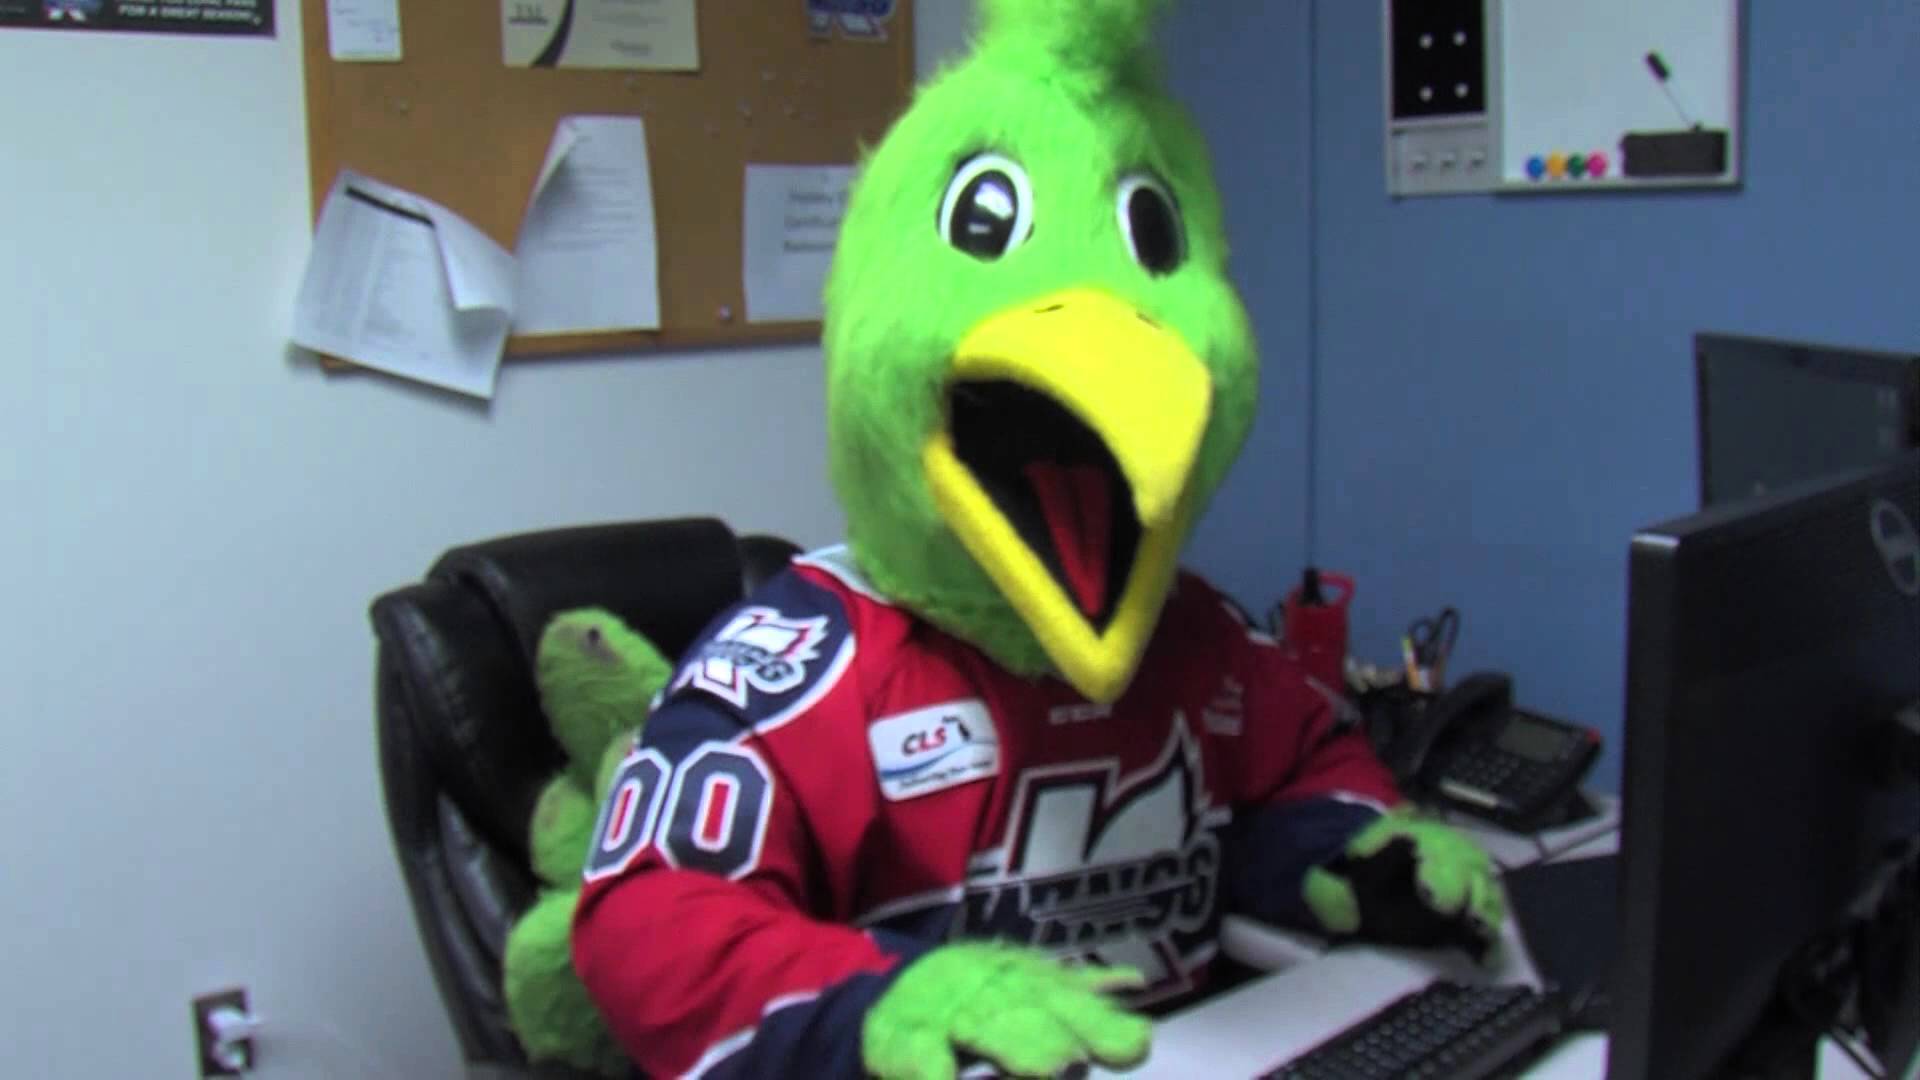 Mascot Porn - VIDEO] Hockey mascot searching for bird porn â€“ Hockey Squawk